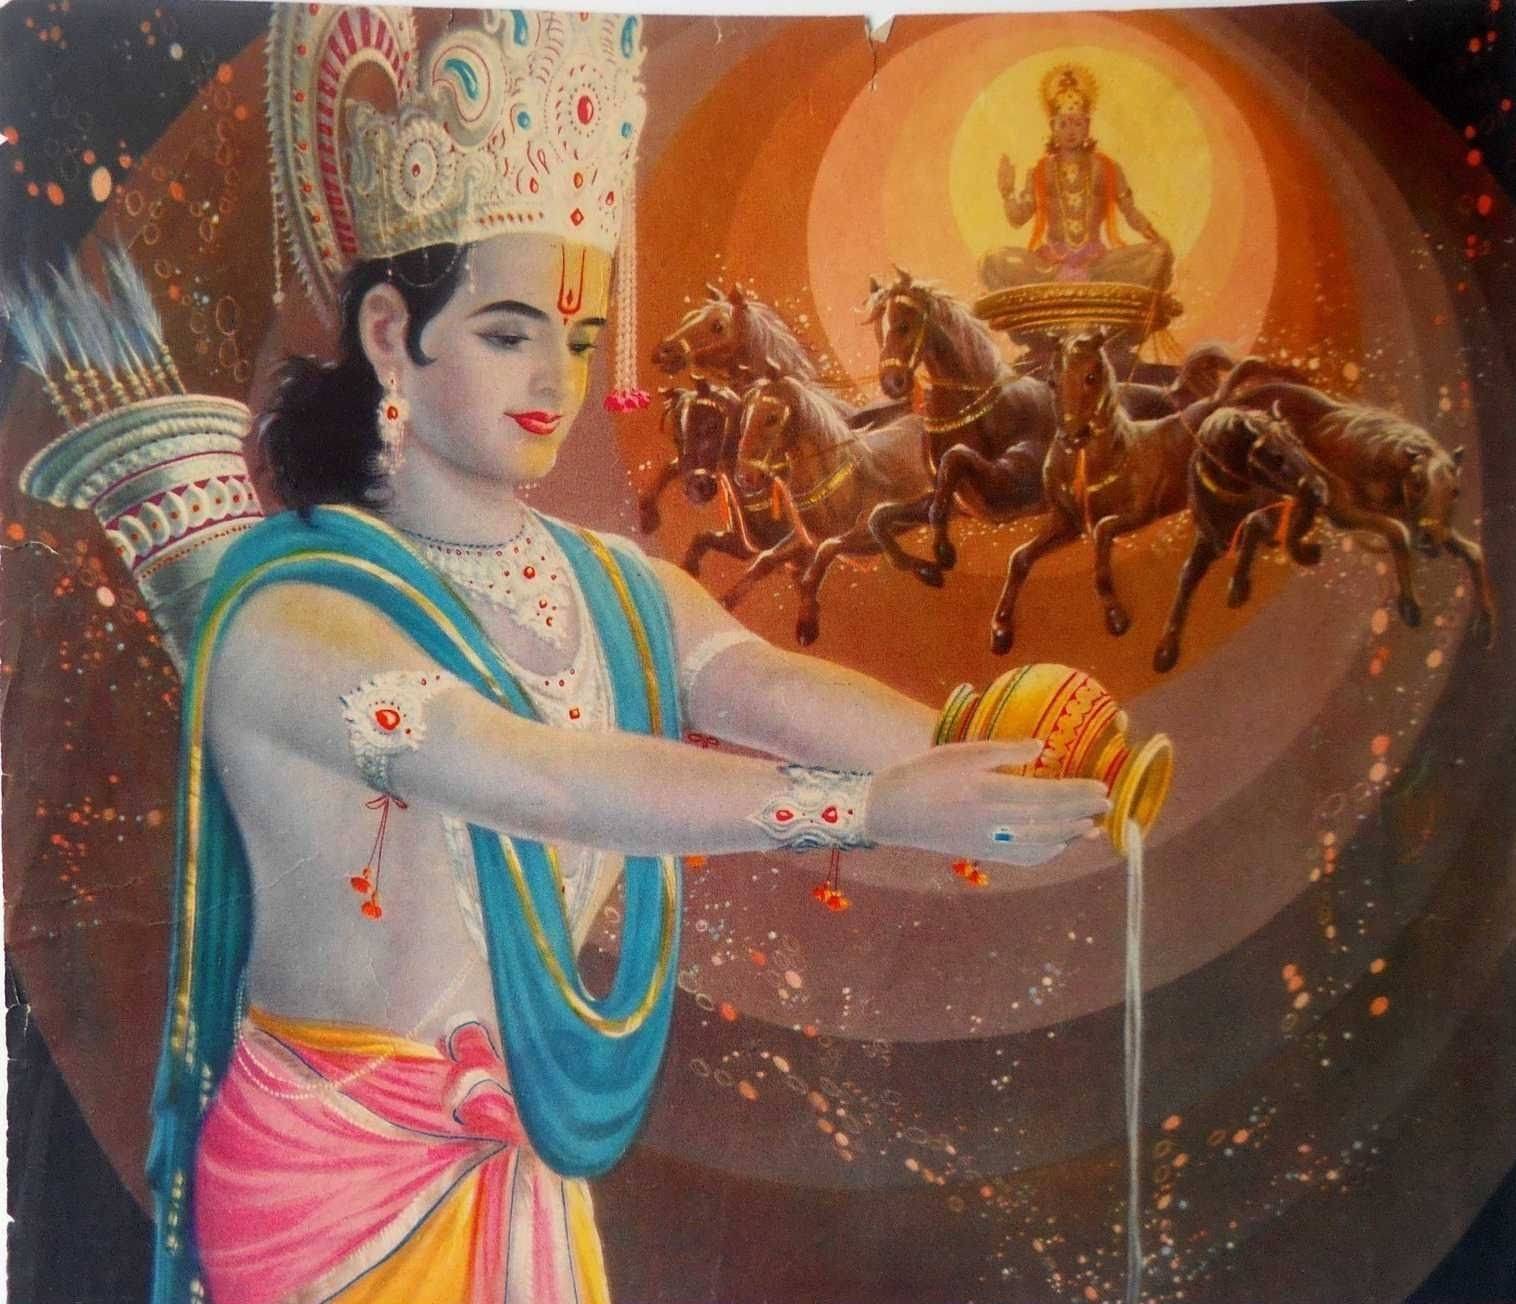 Сурья - бог солнца в индуизме.эзотерика |